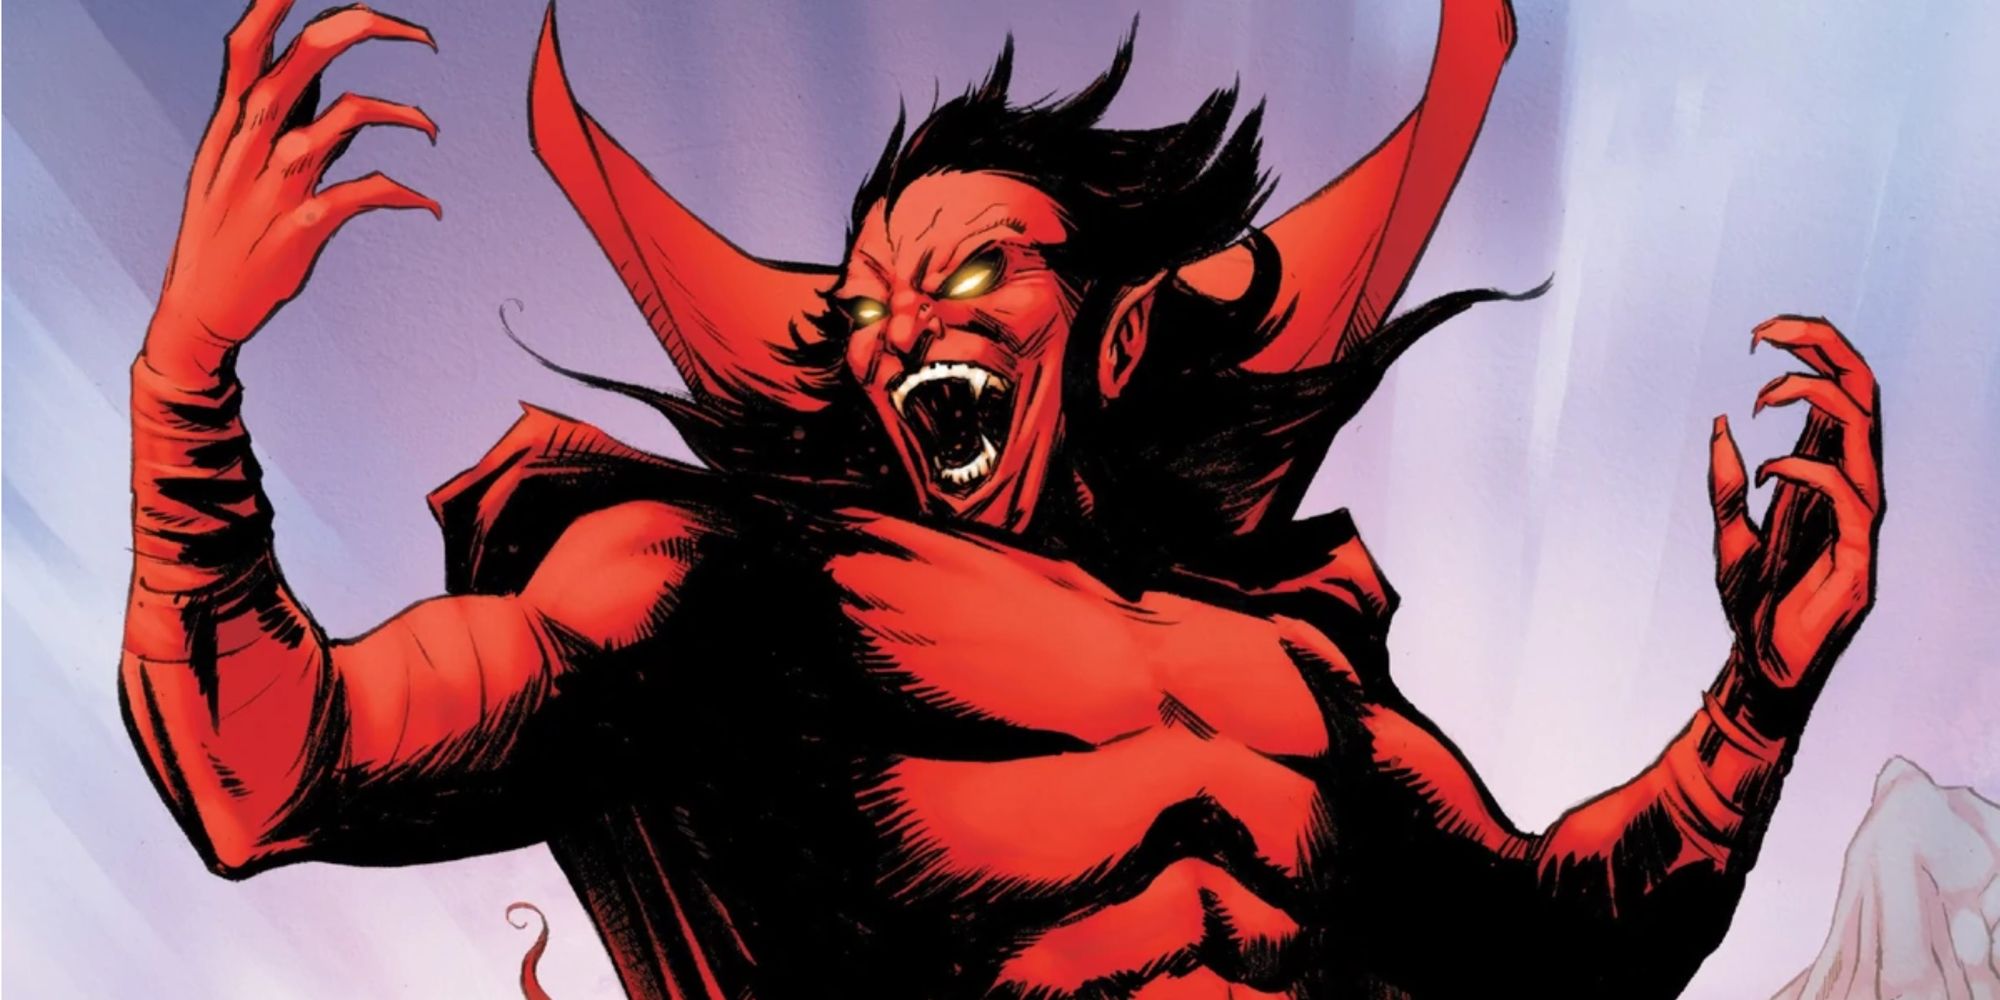 Mephisto laughs in Marvel Comics.